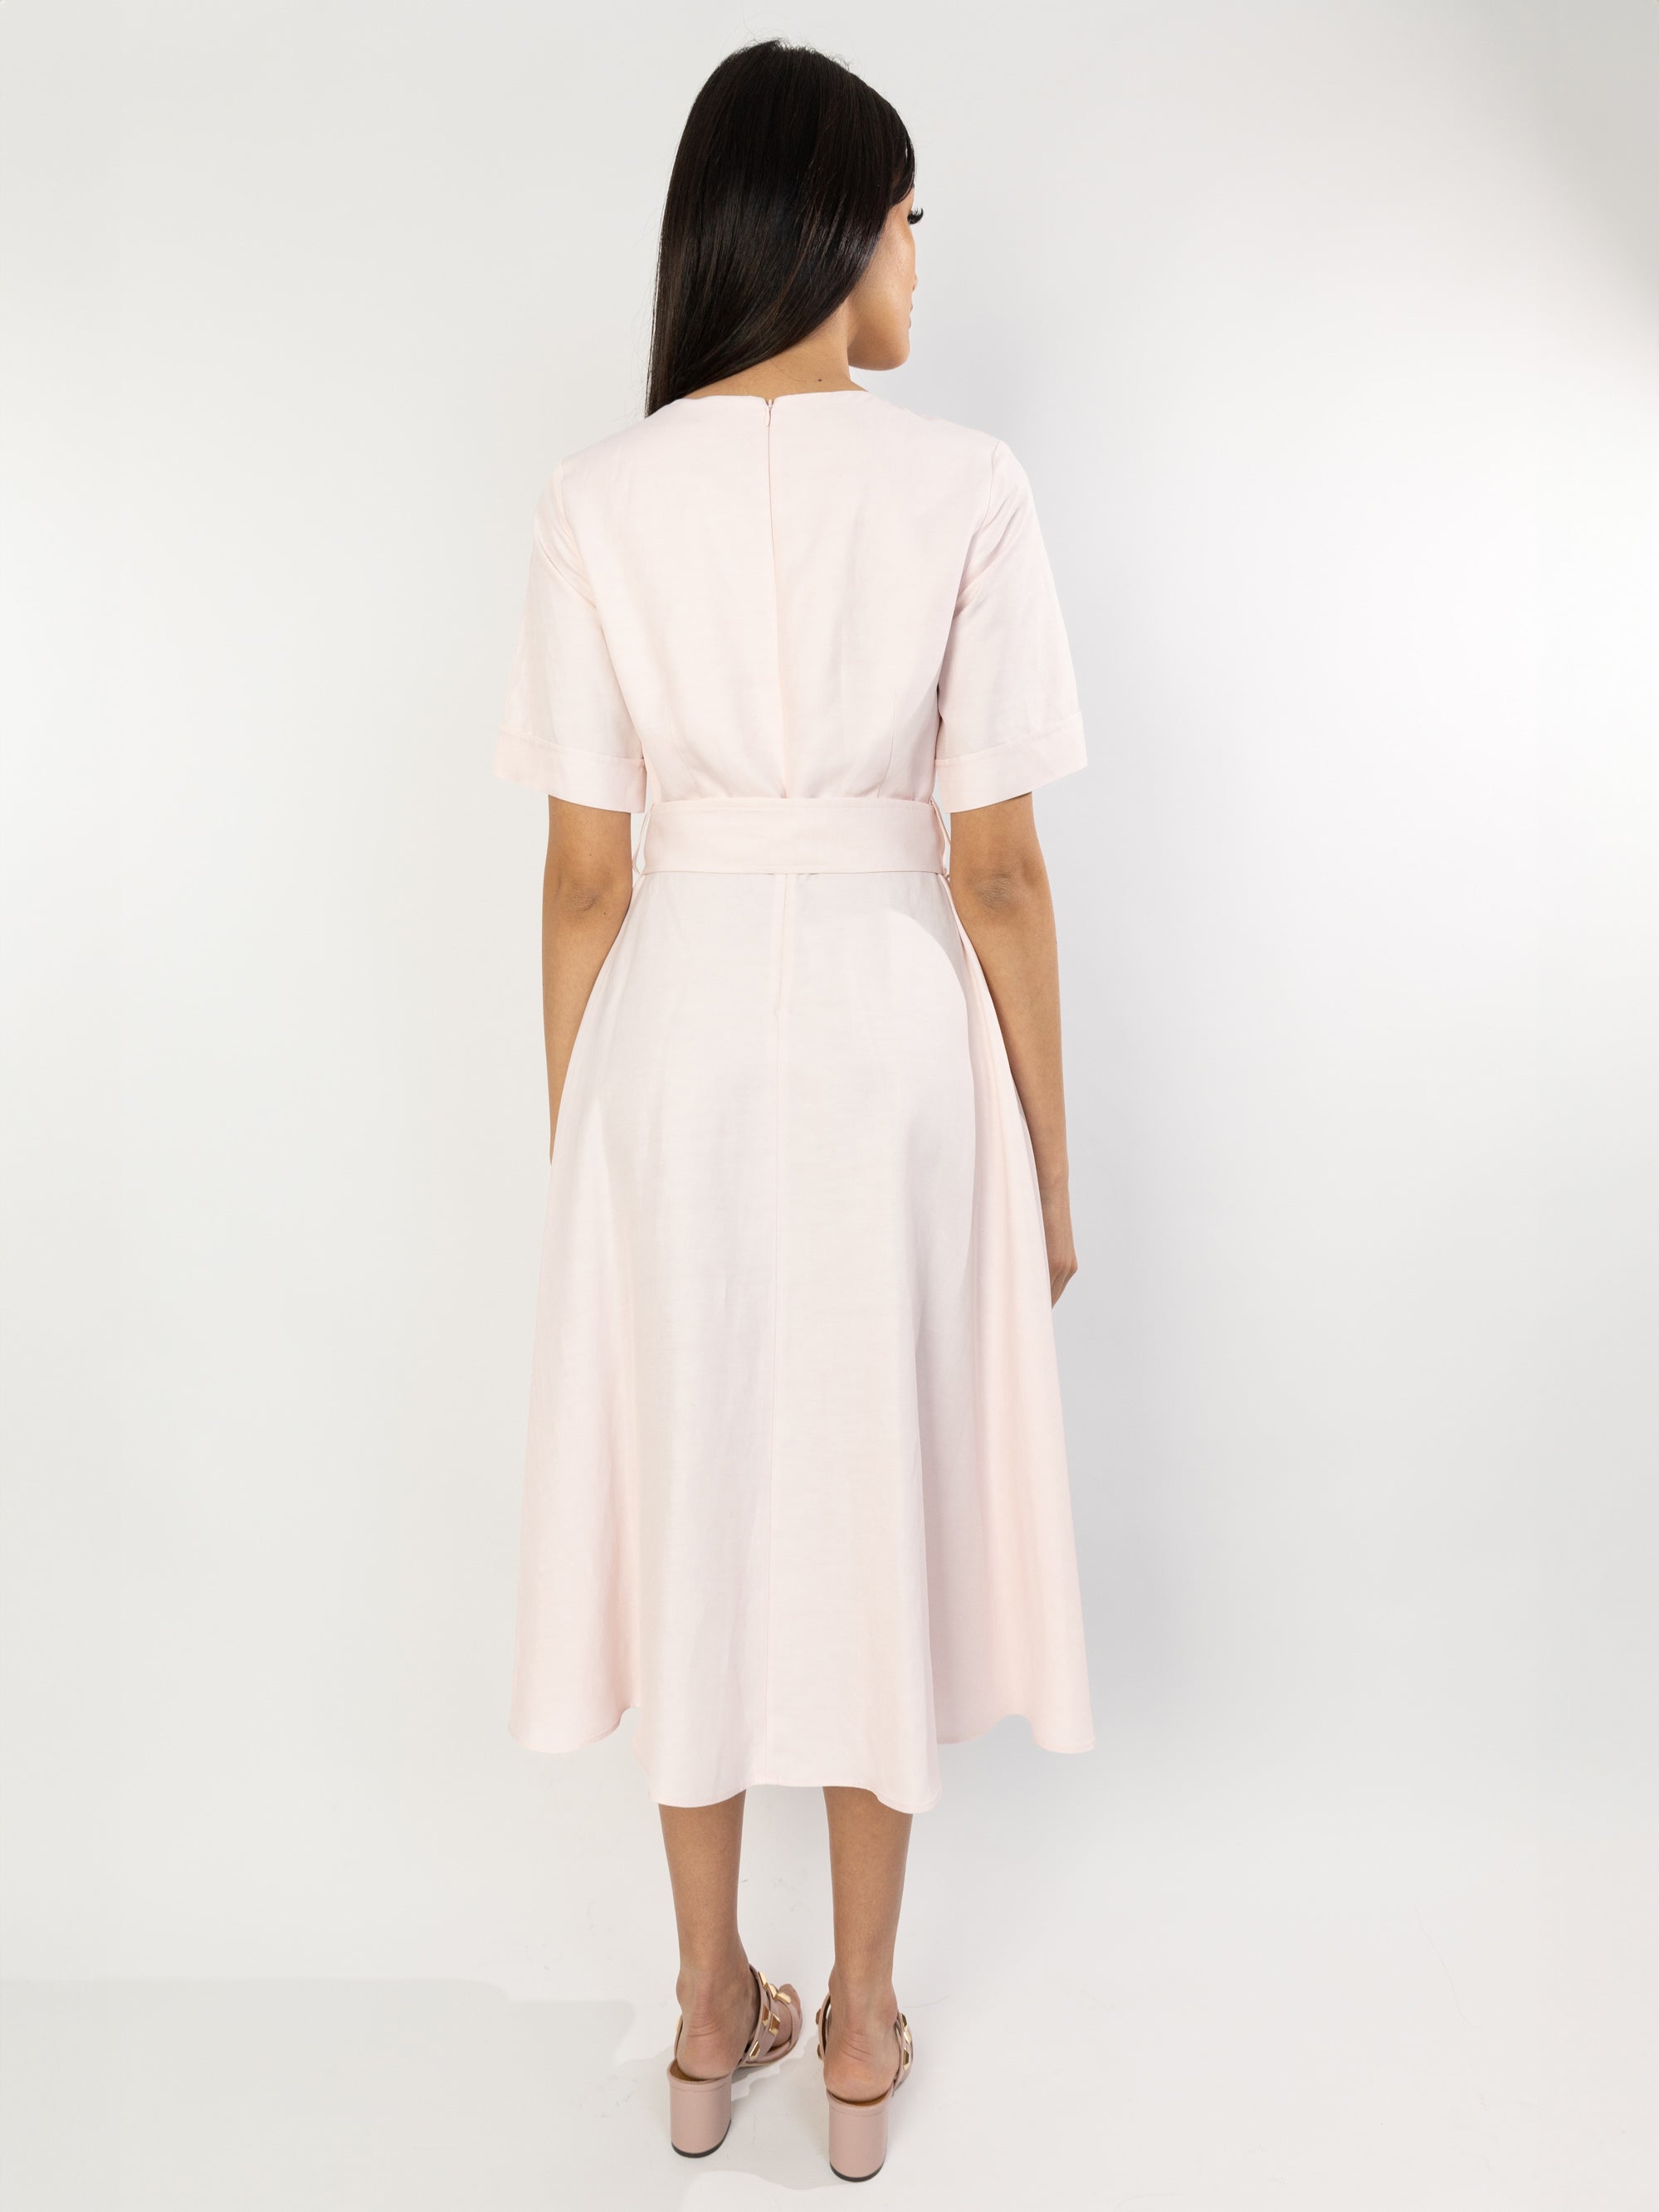 Longuette dress with peach blossom belt